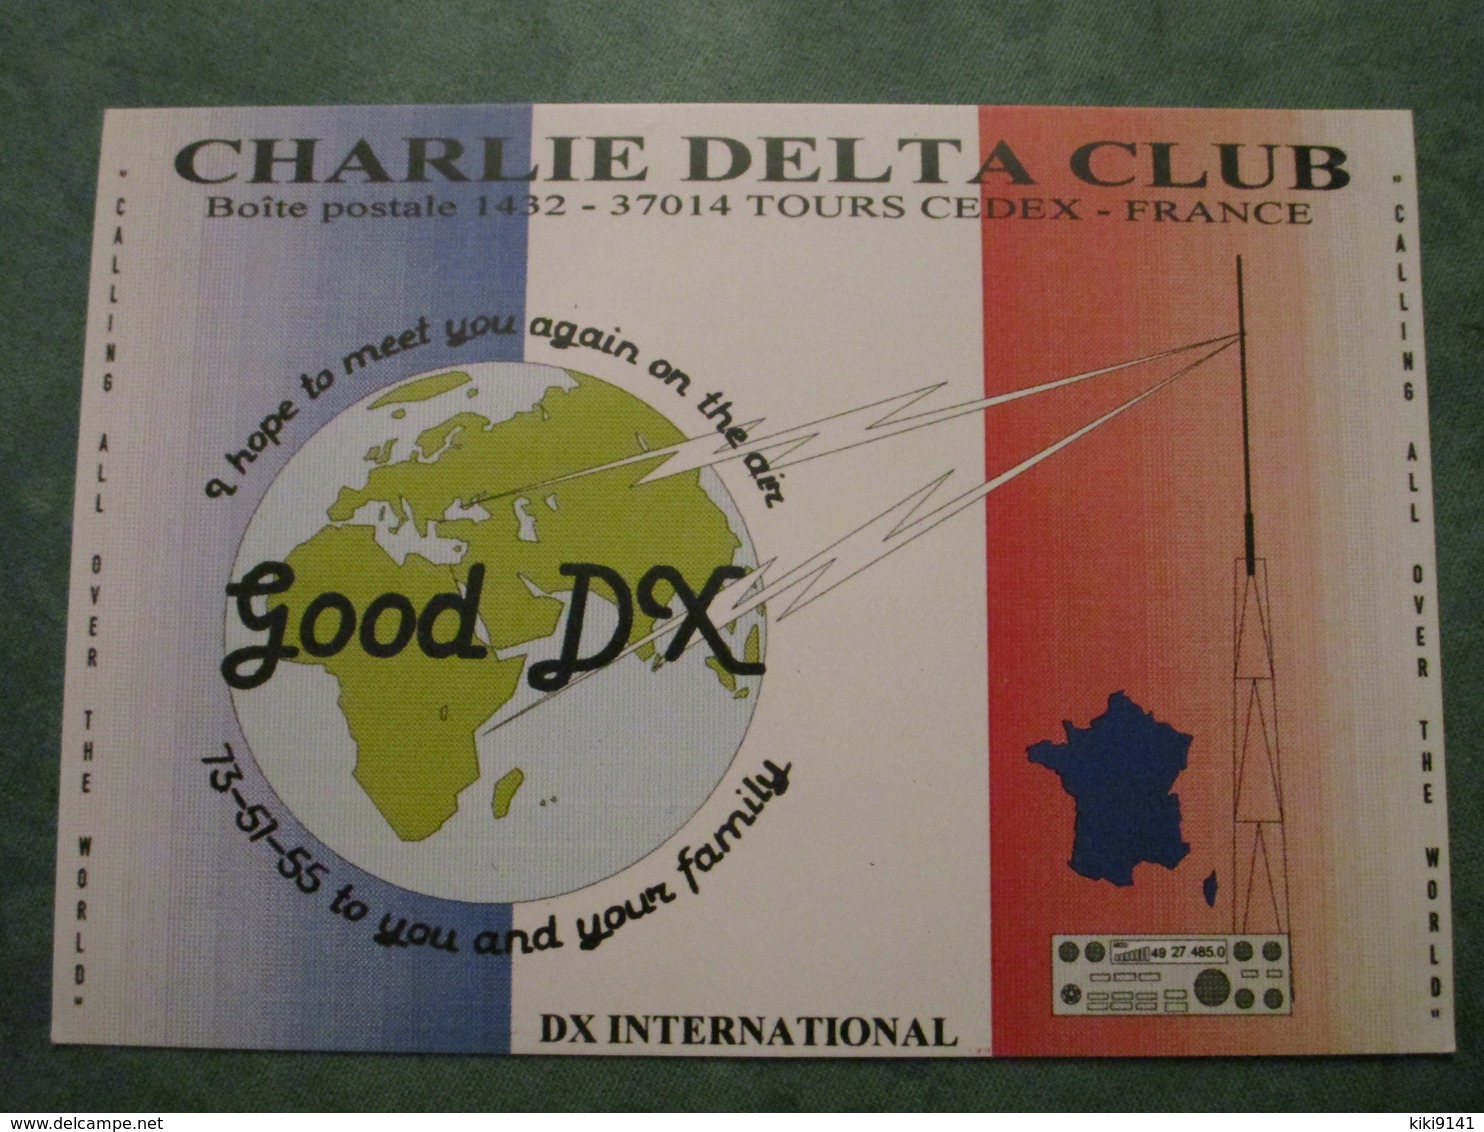 CHARLIE DELTA CLUB - Radio